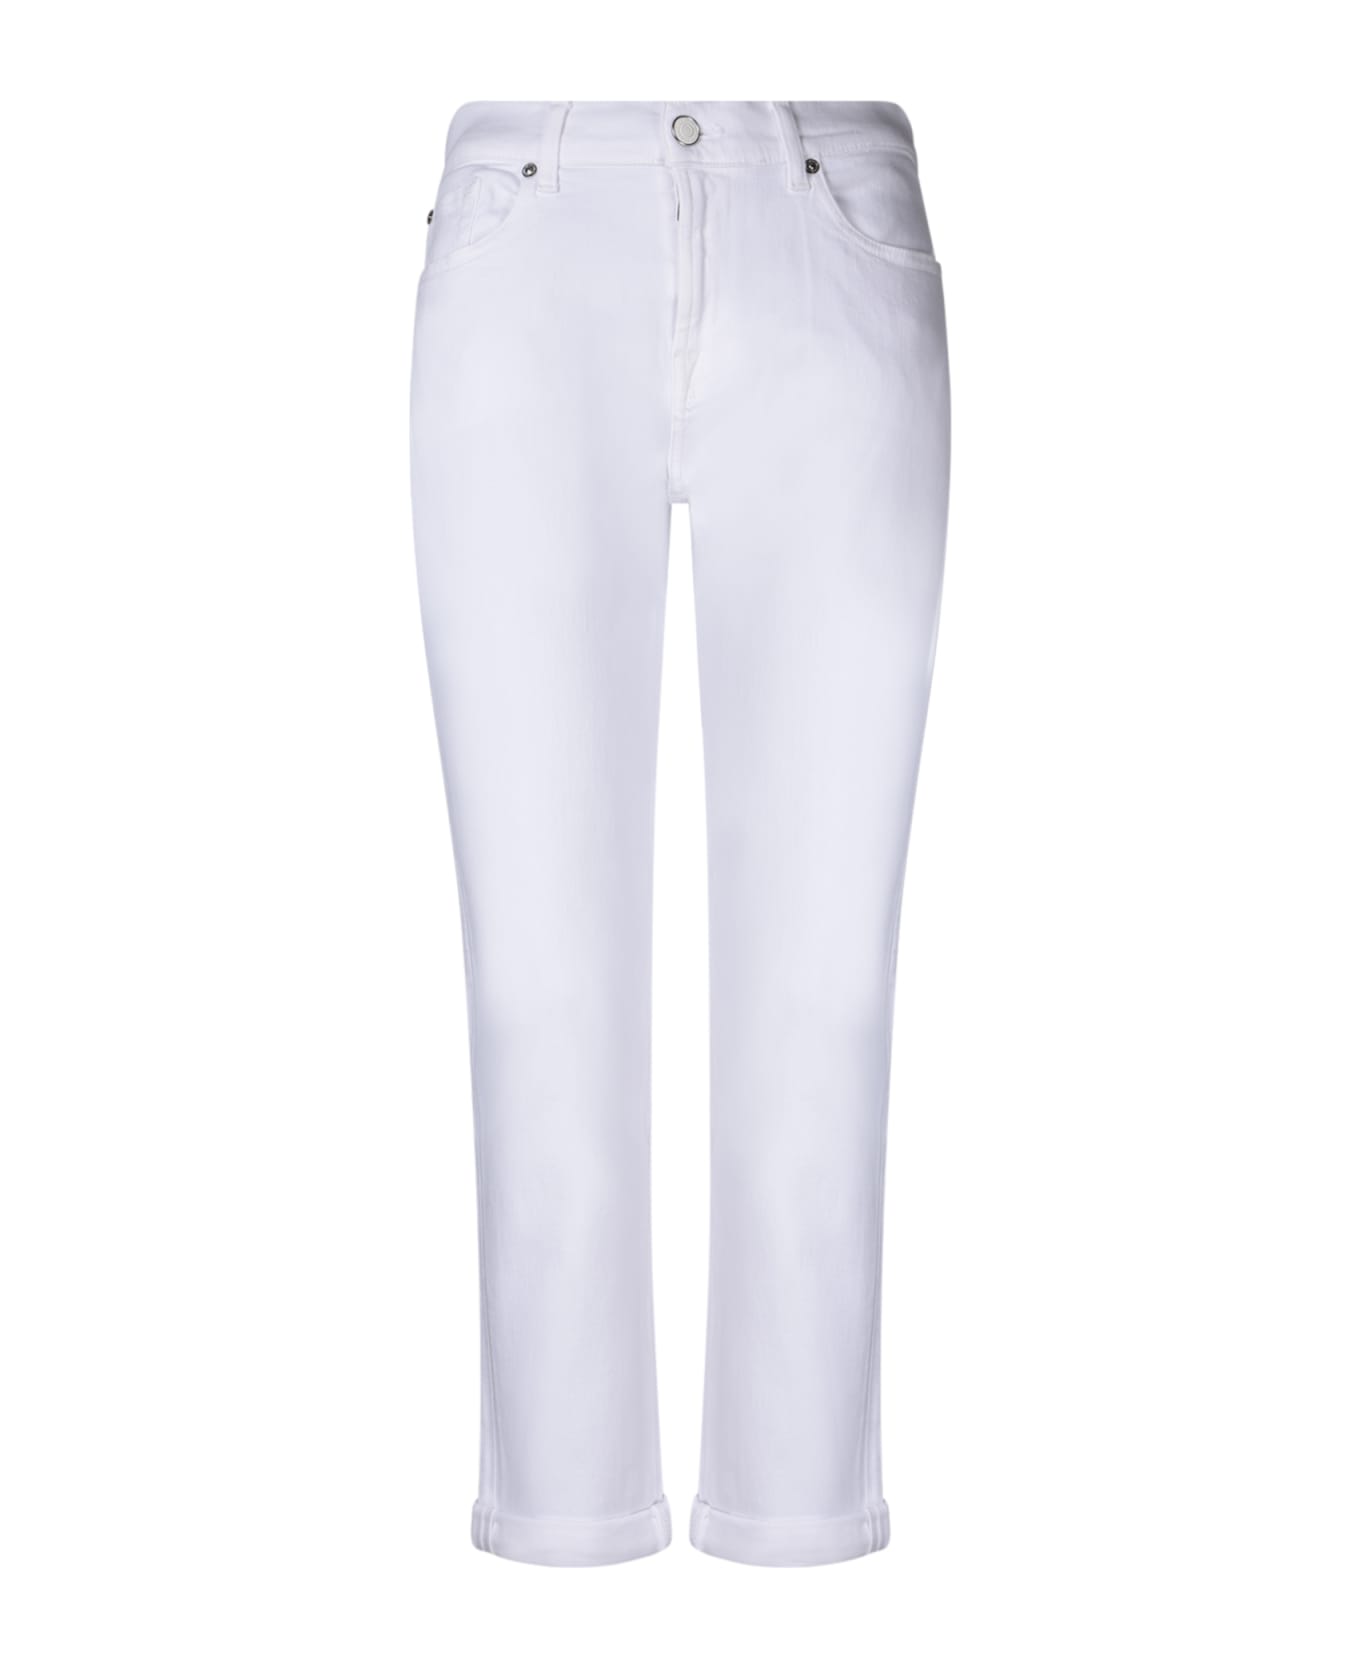 7 For All Mankind Josefina White Jeans - White